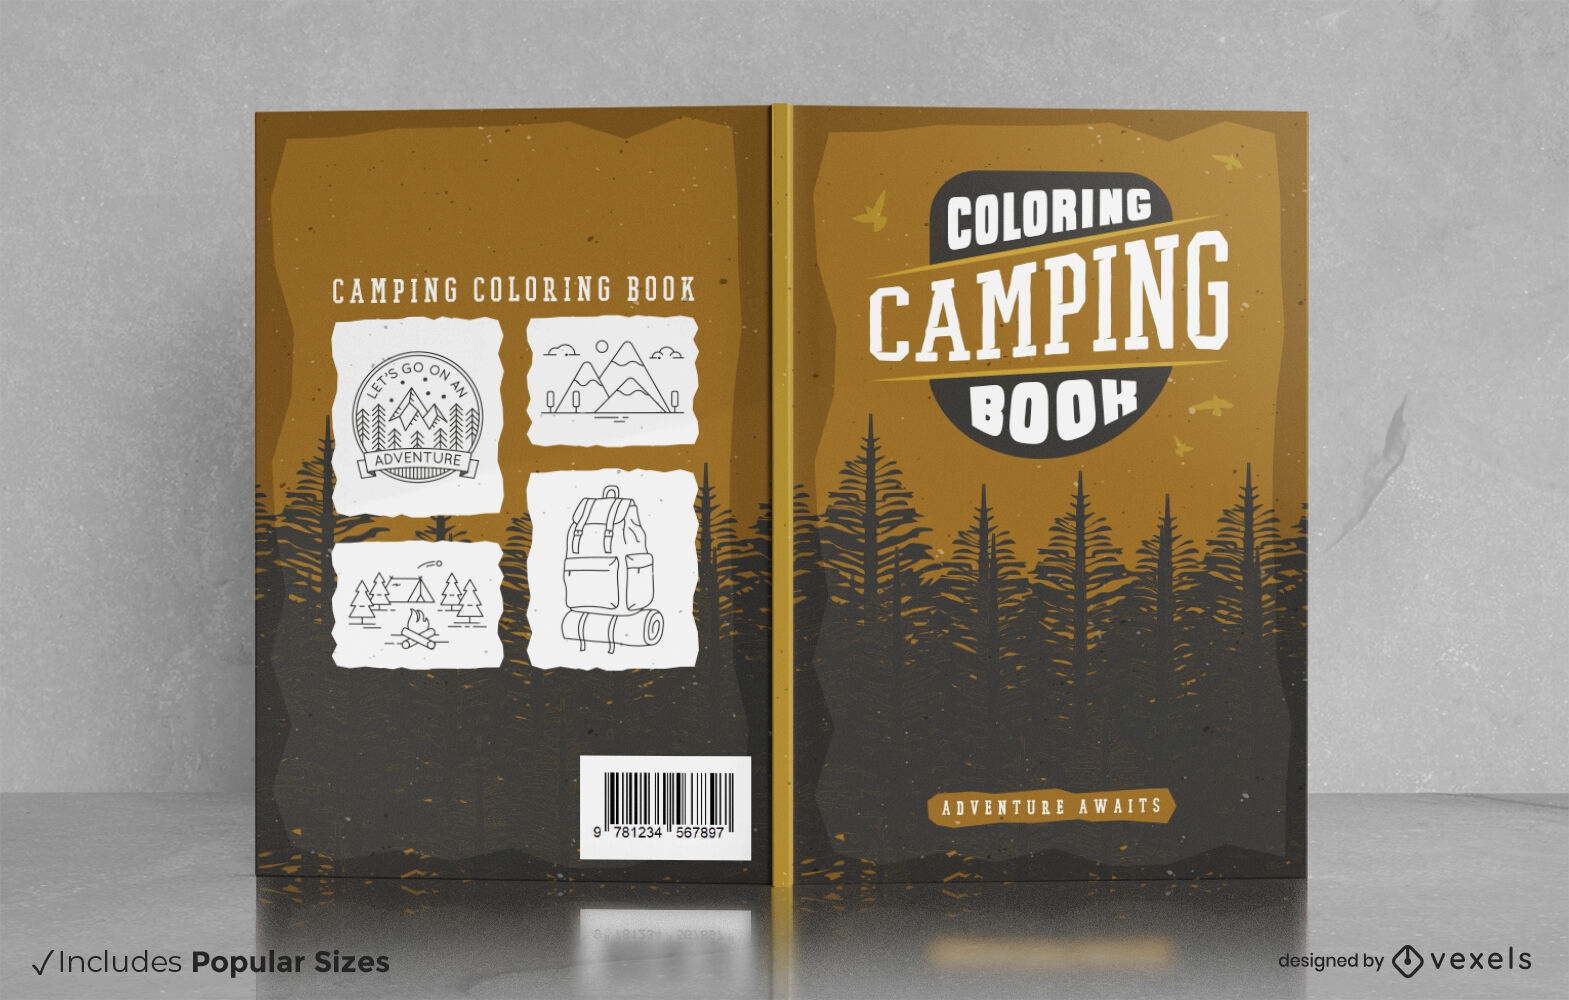 Camping coloring book design